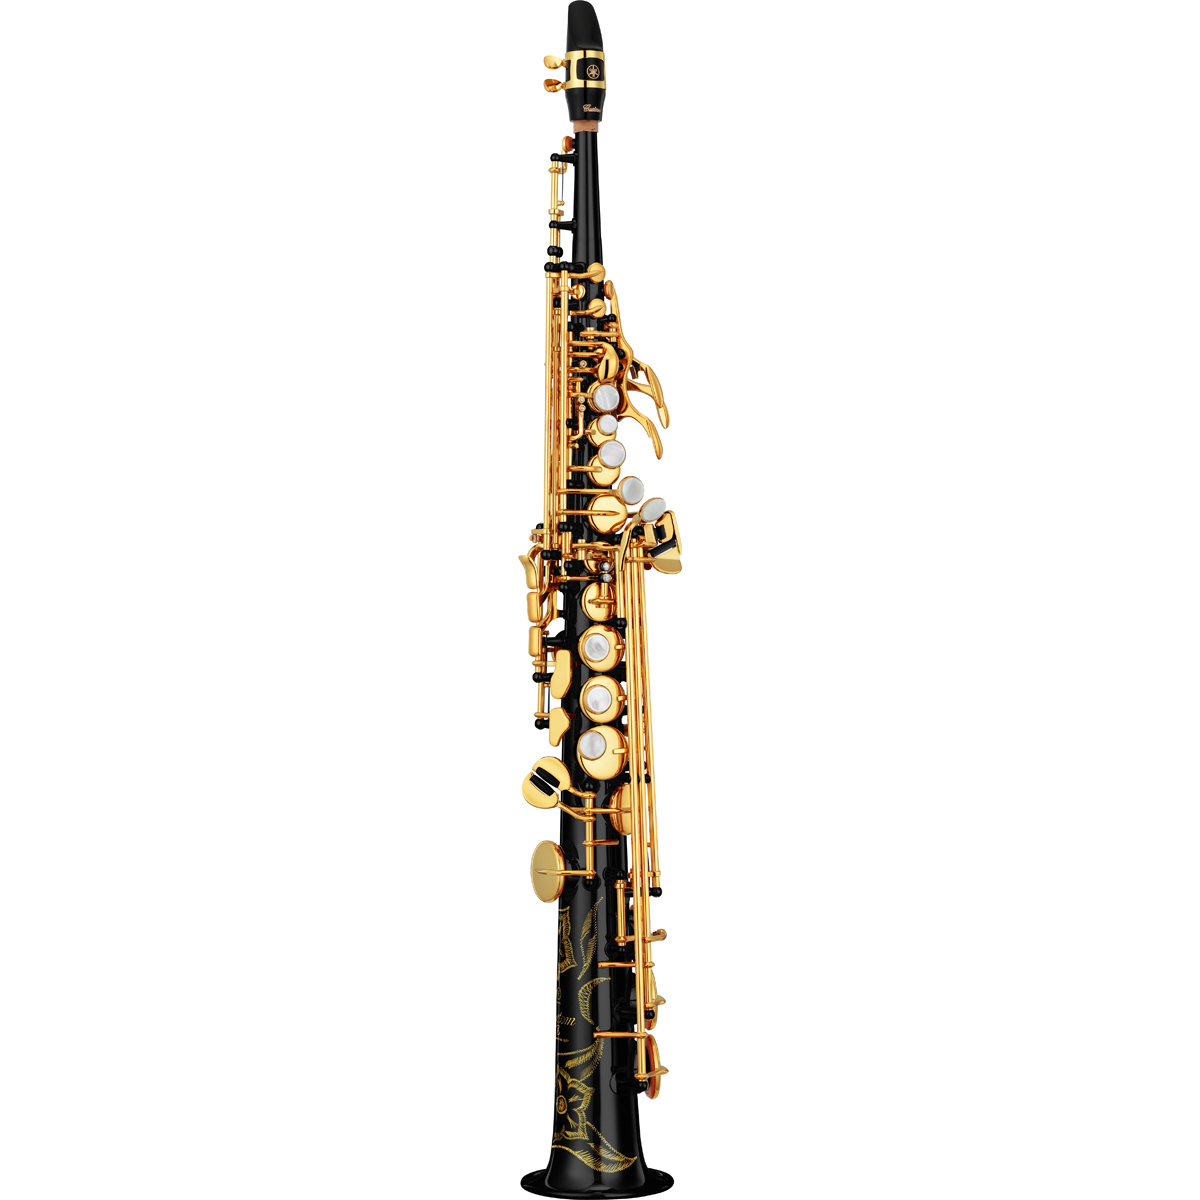 Saxofon sopránový Yamaha  YSS 82ZB